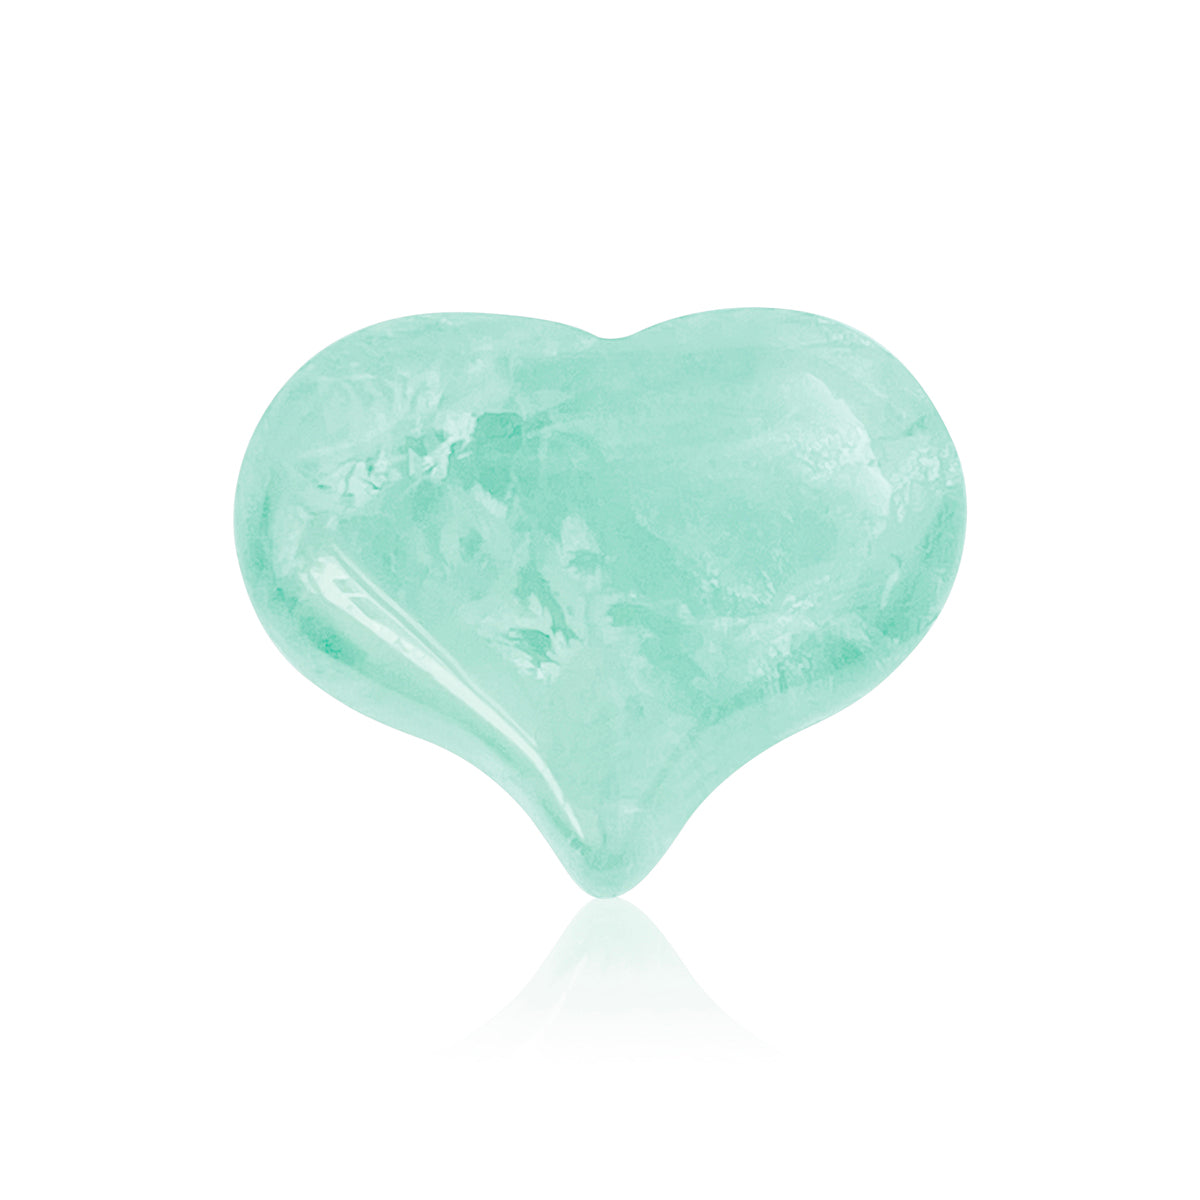 Flourite Heart Shaped Healing Gemstone for Stability